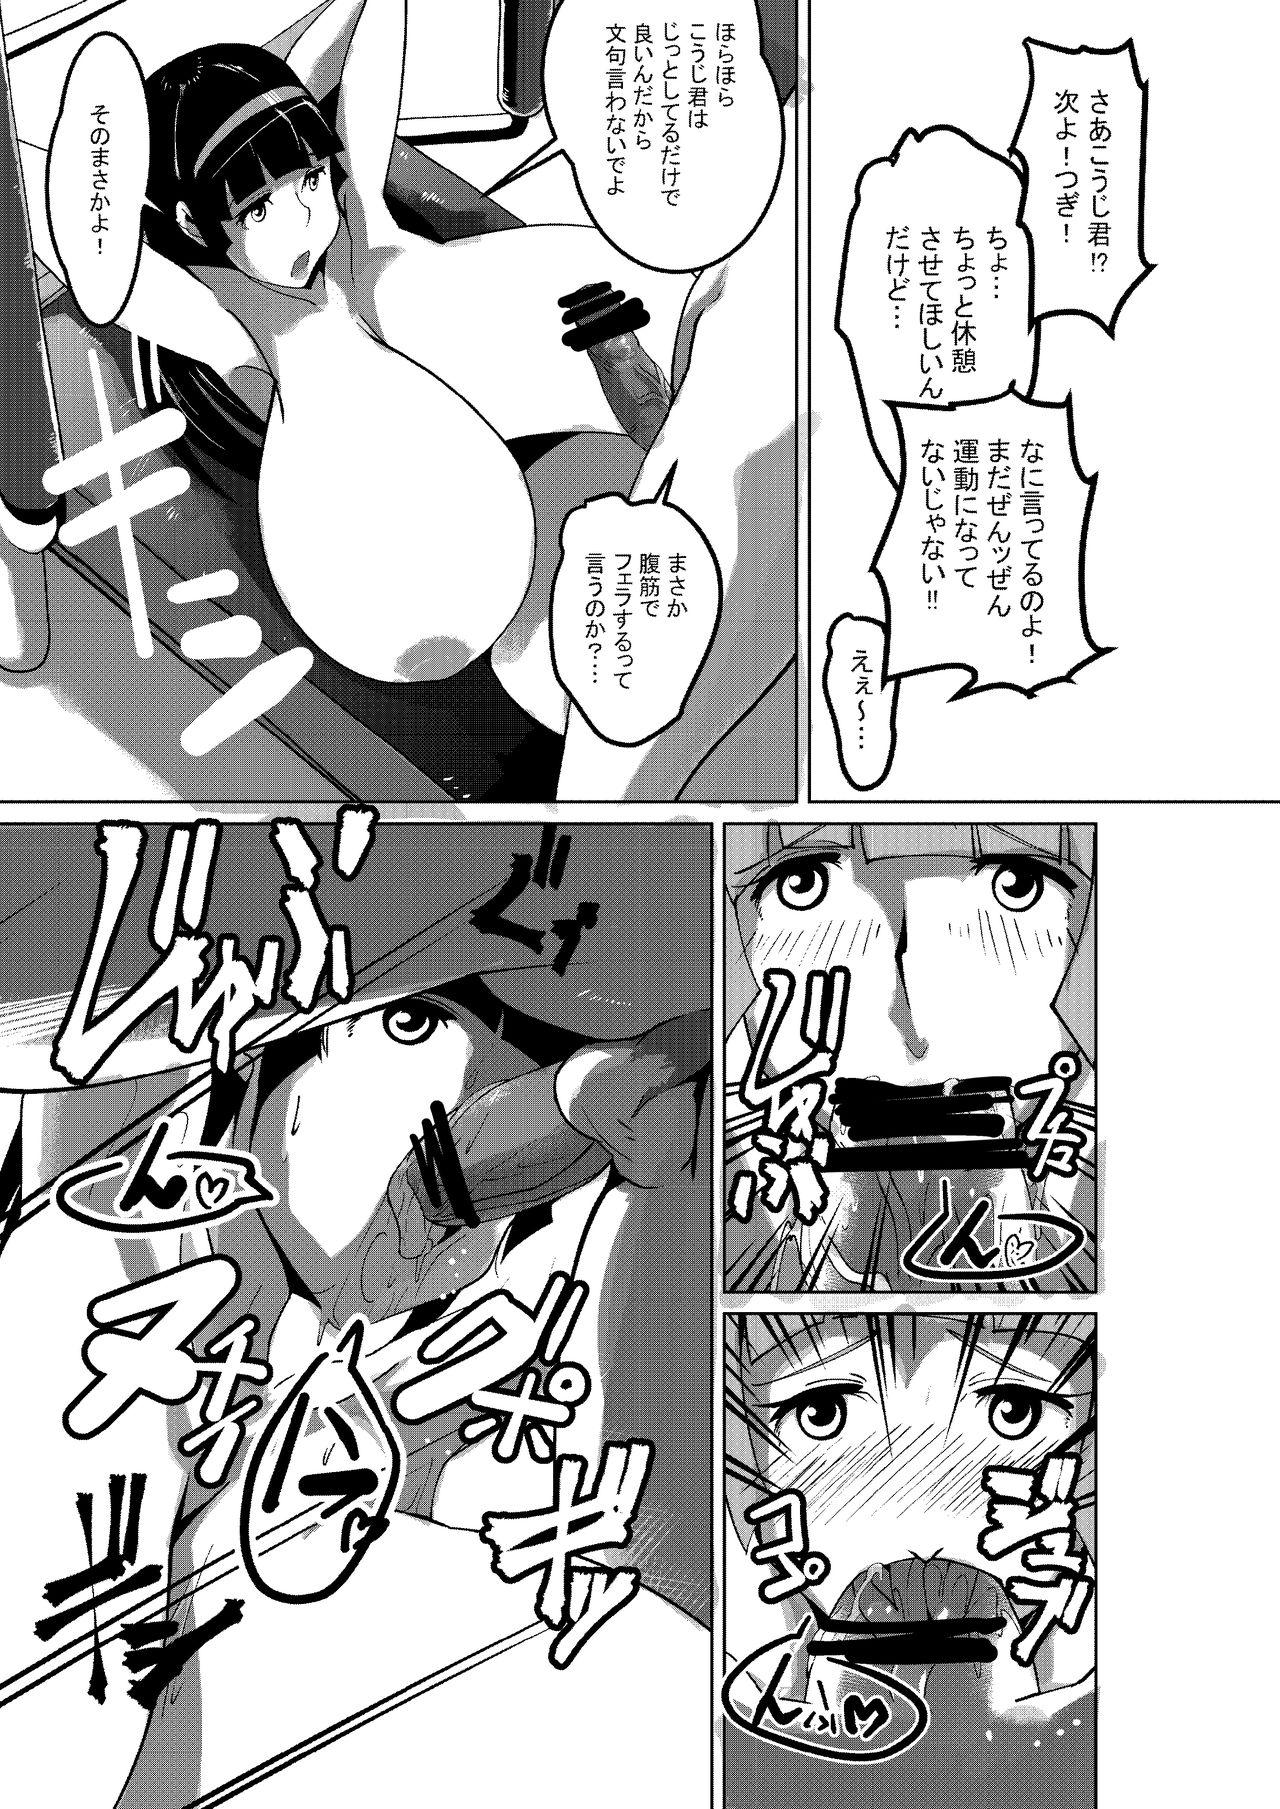 Chacal Sayaka no Diet Z Keikaku - Mazinger z Dick - Page 9